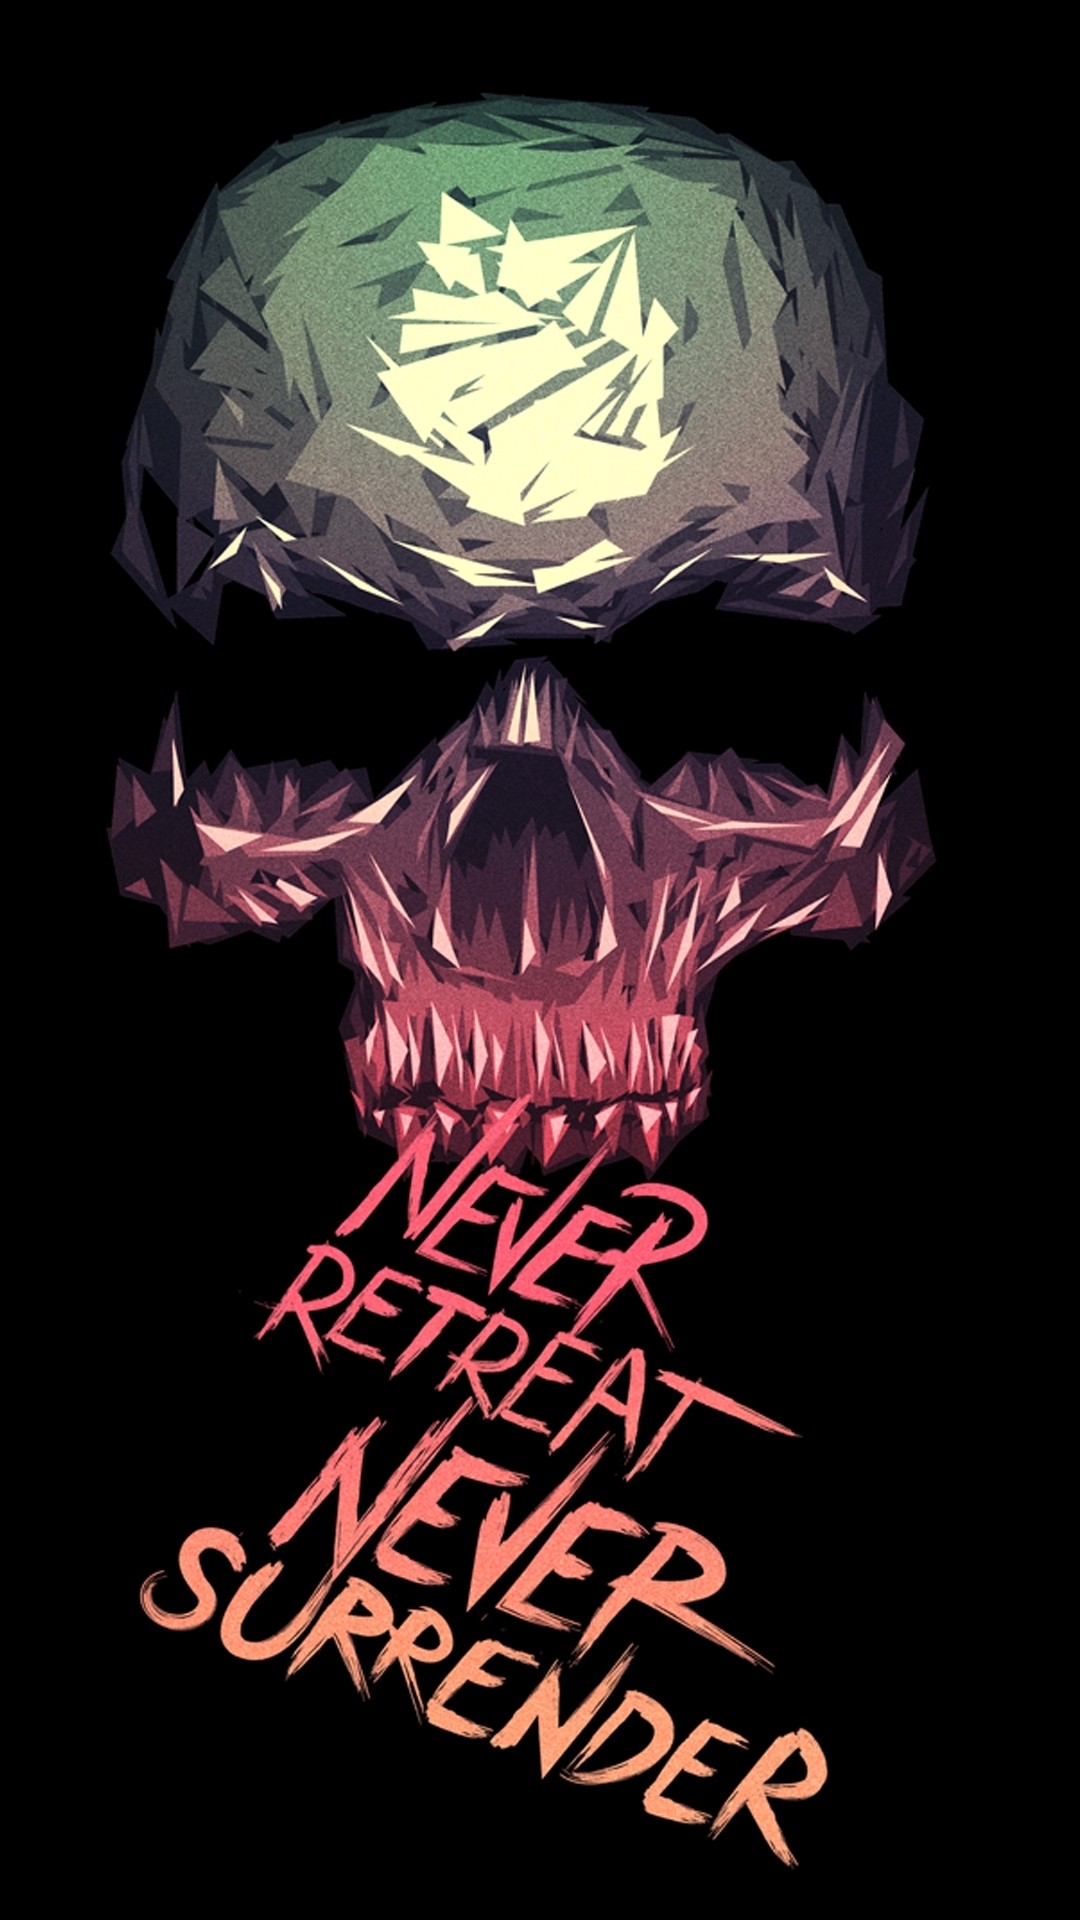 Punisher Skull IPhone Wallpaper (82+ images)